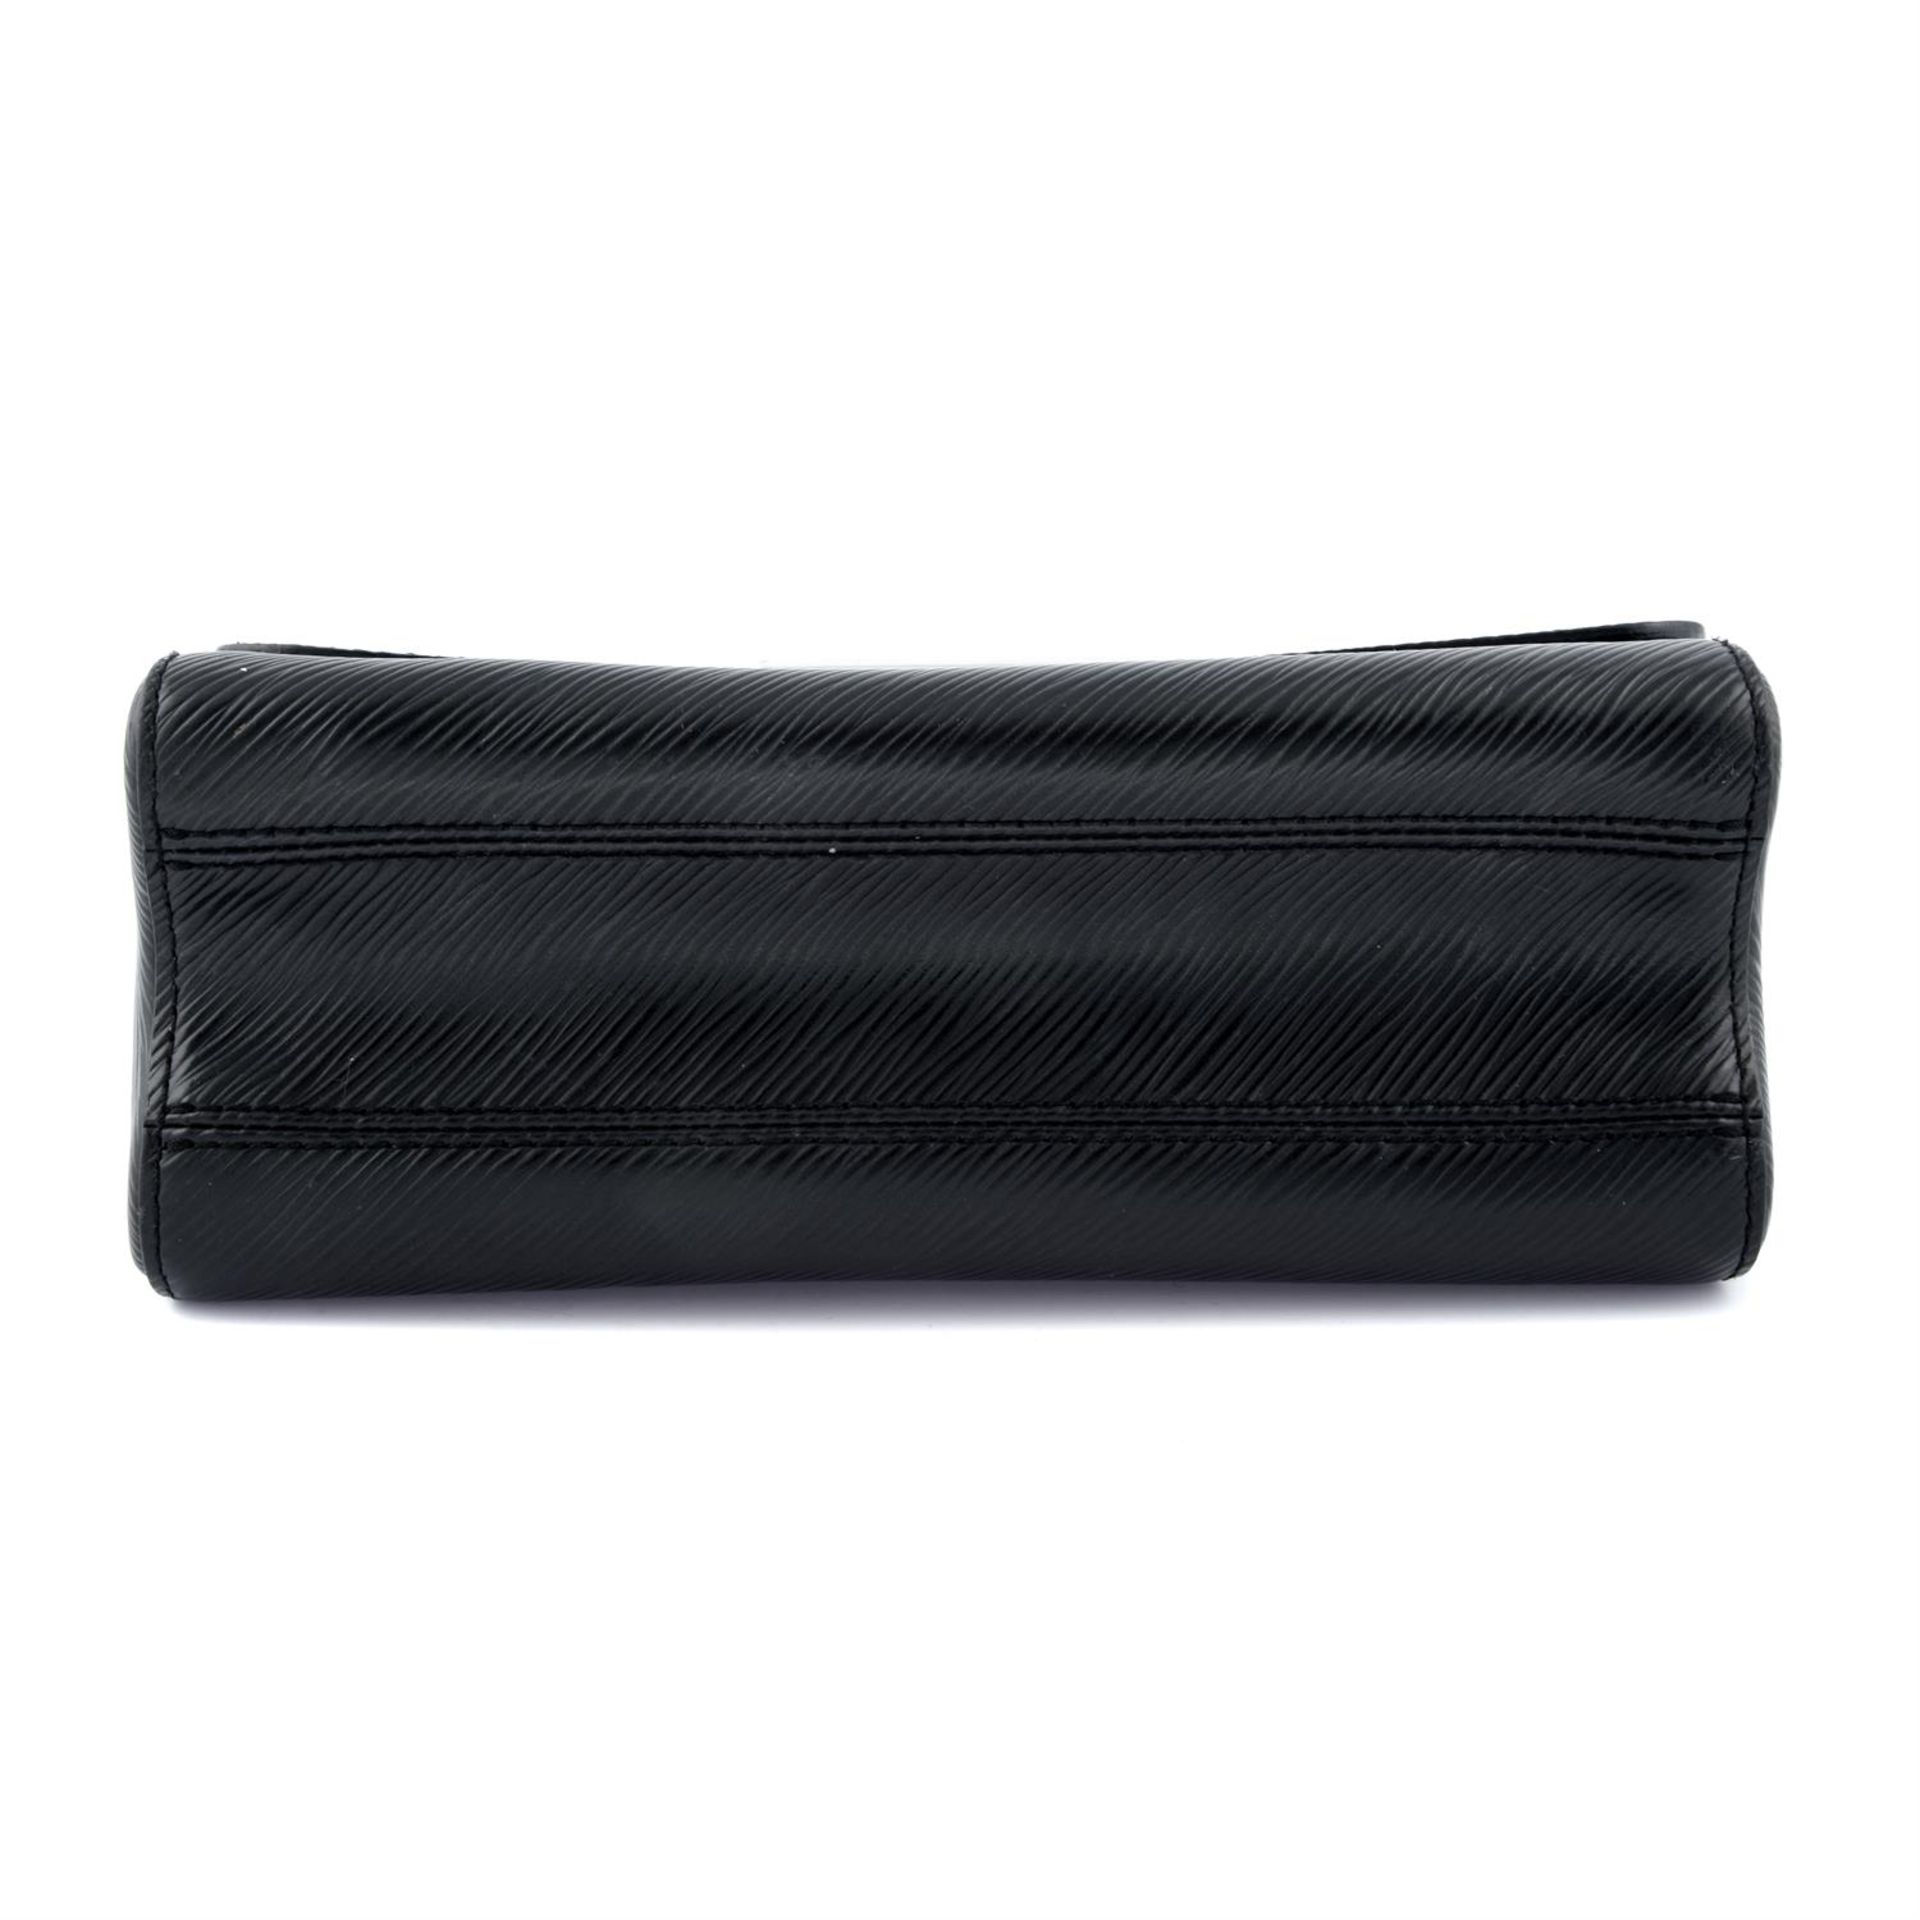 LOUIS VUITTON - a black Epi leather Twist MM shoulder bag. - Image 4 of 4